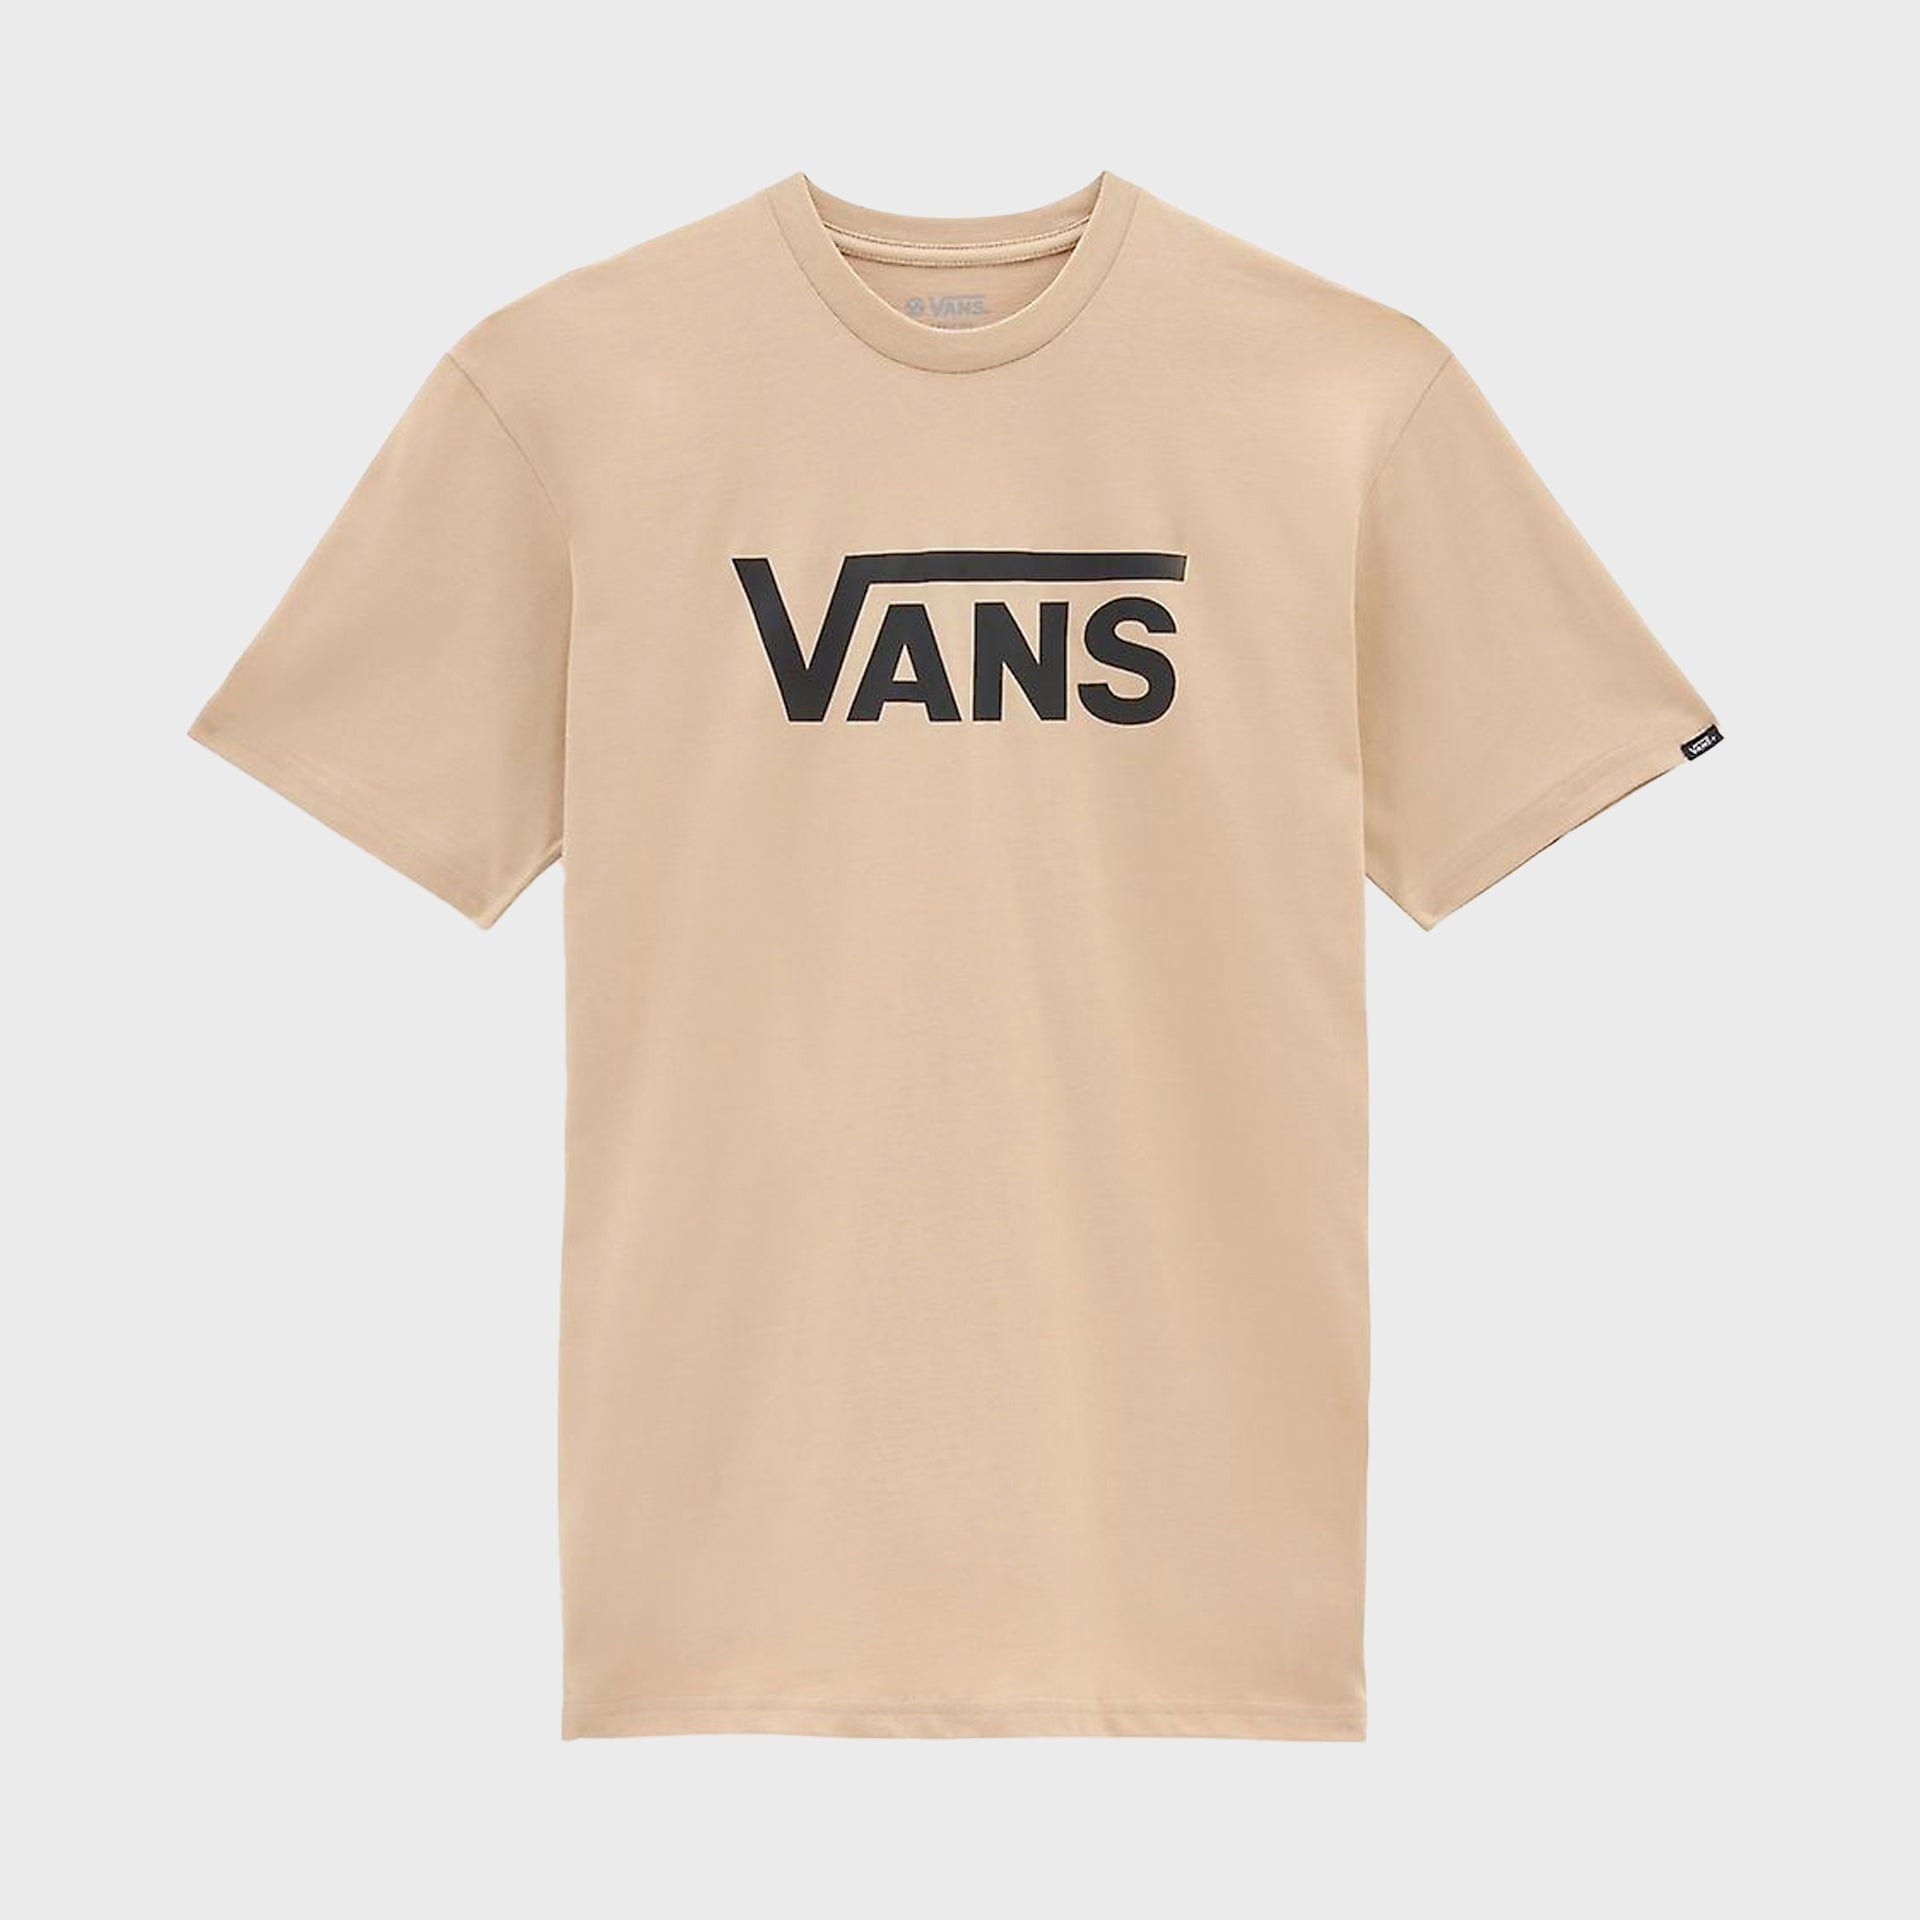 Mens Vans Classic T-shirt / Taos Taupe/Black - ManGo Surfing